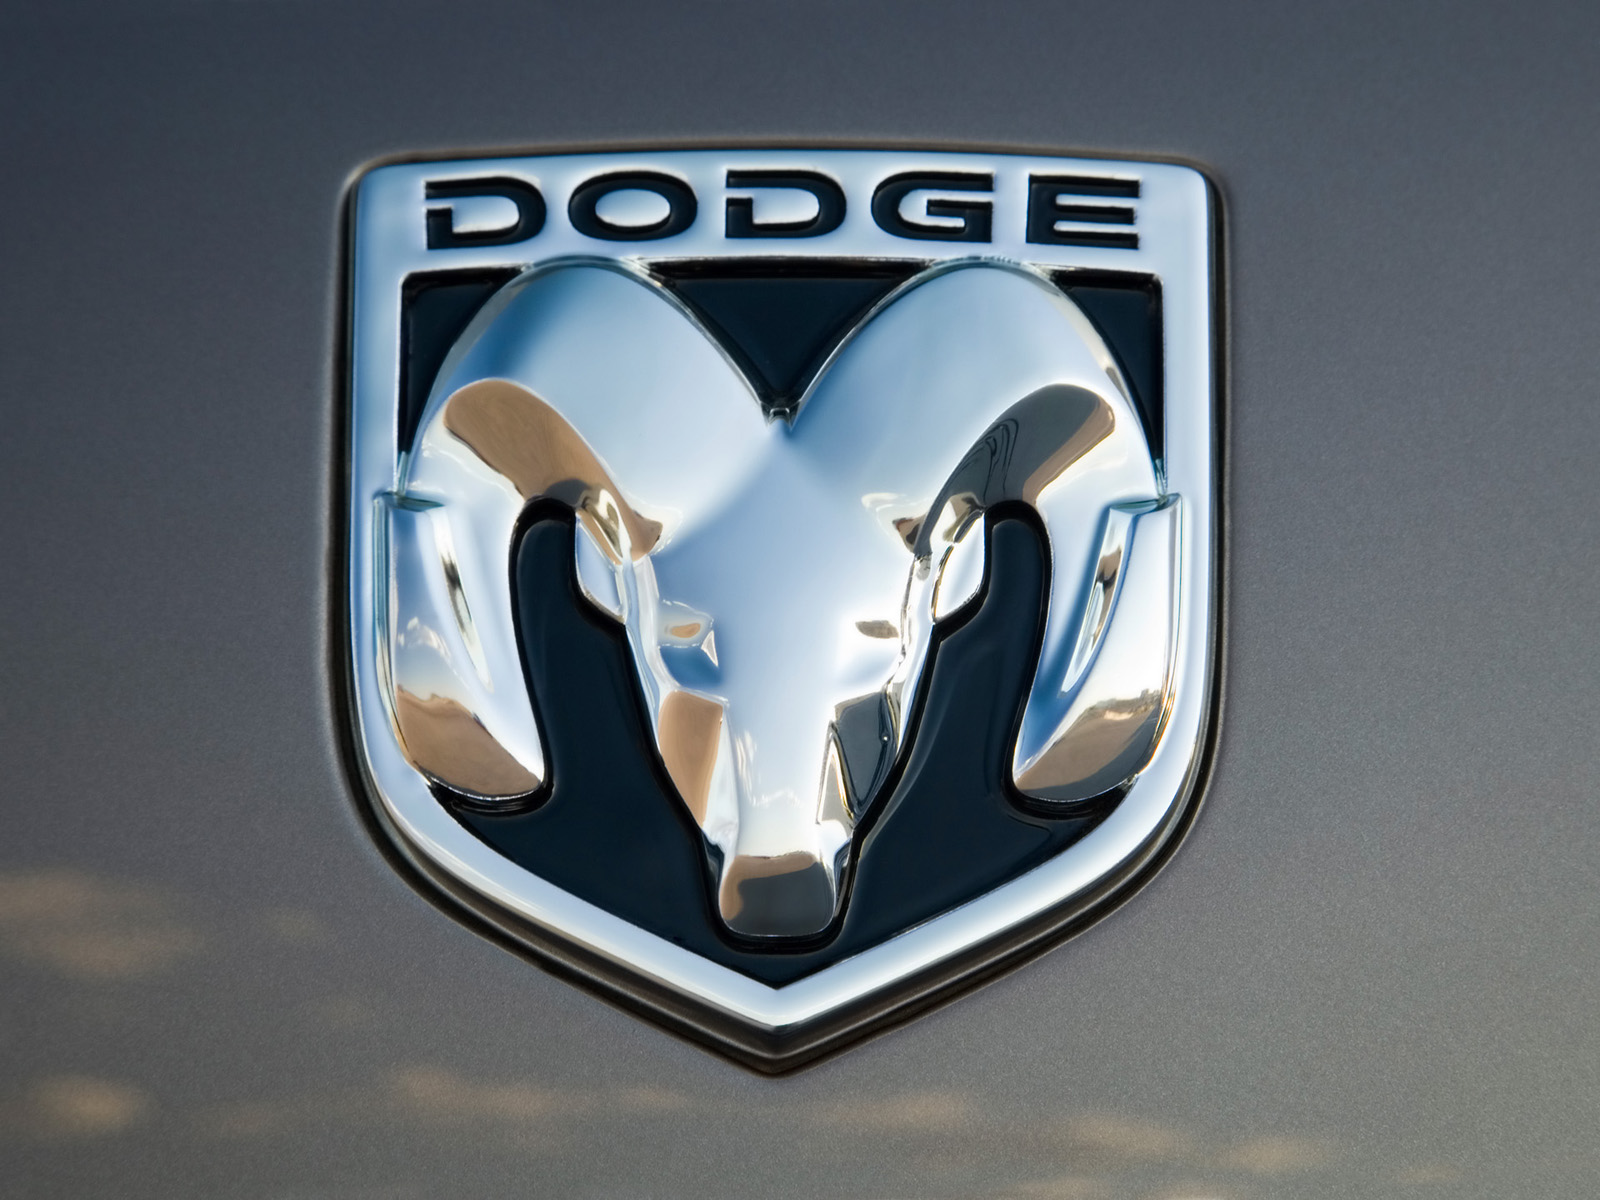 2009 Dodge Ram pickup truck logo wallpaper 1600x1200 113601